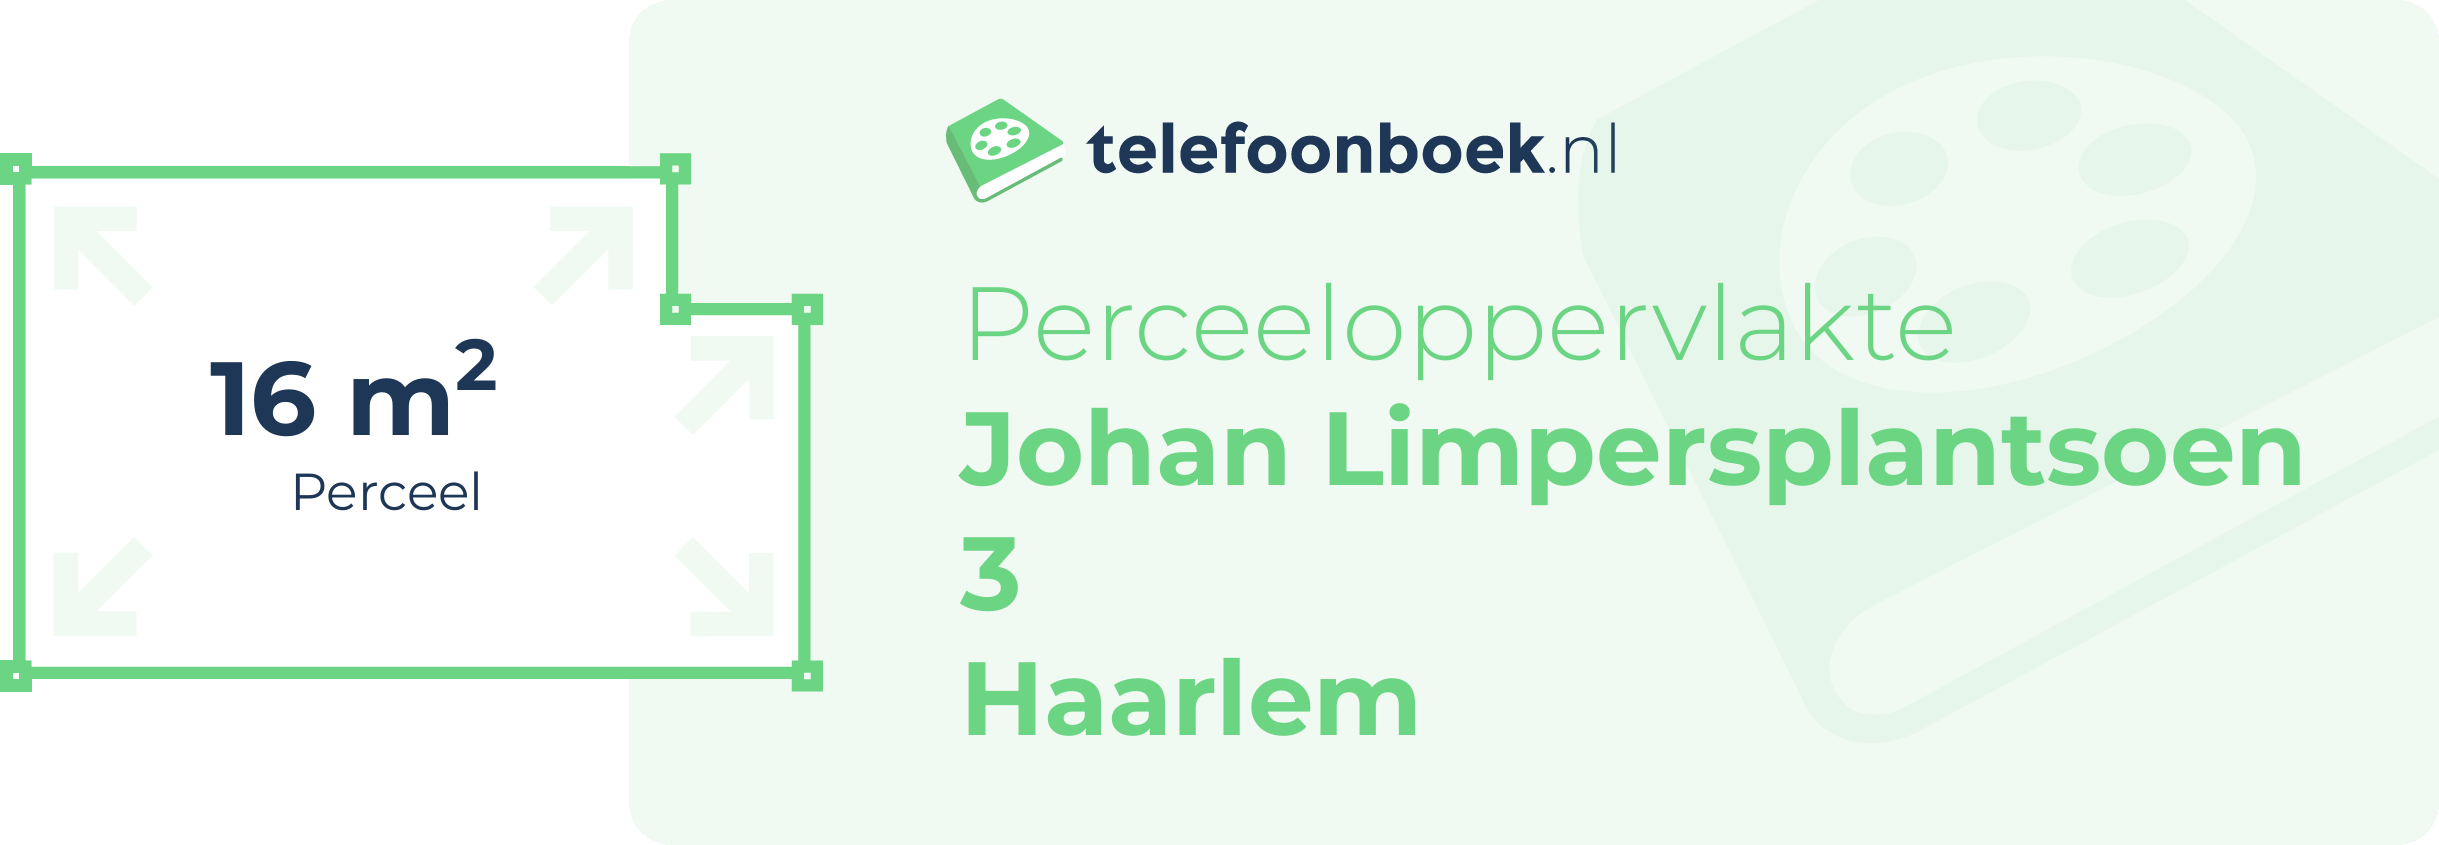 Perceeloppervlakte Johan Limpersplantsoen 3 Haarlem